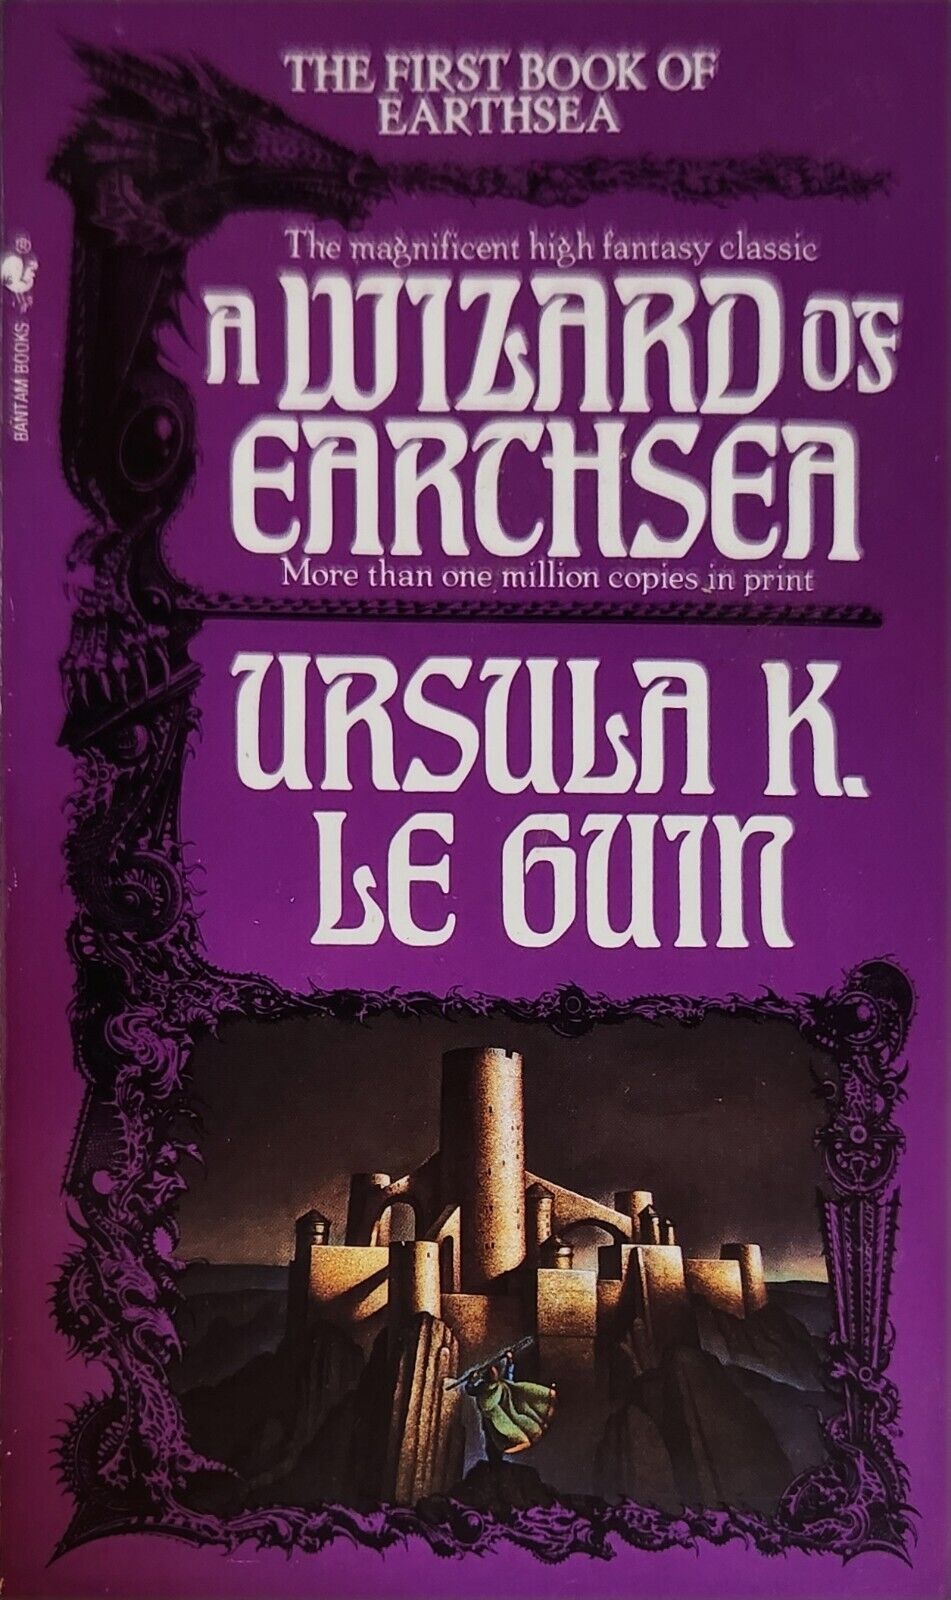 THE WIZARD OF EARTHSEA - Fantasy Vintage Paperback - Bantam Ursula K. Le Guin